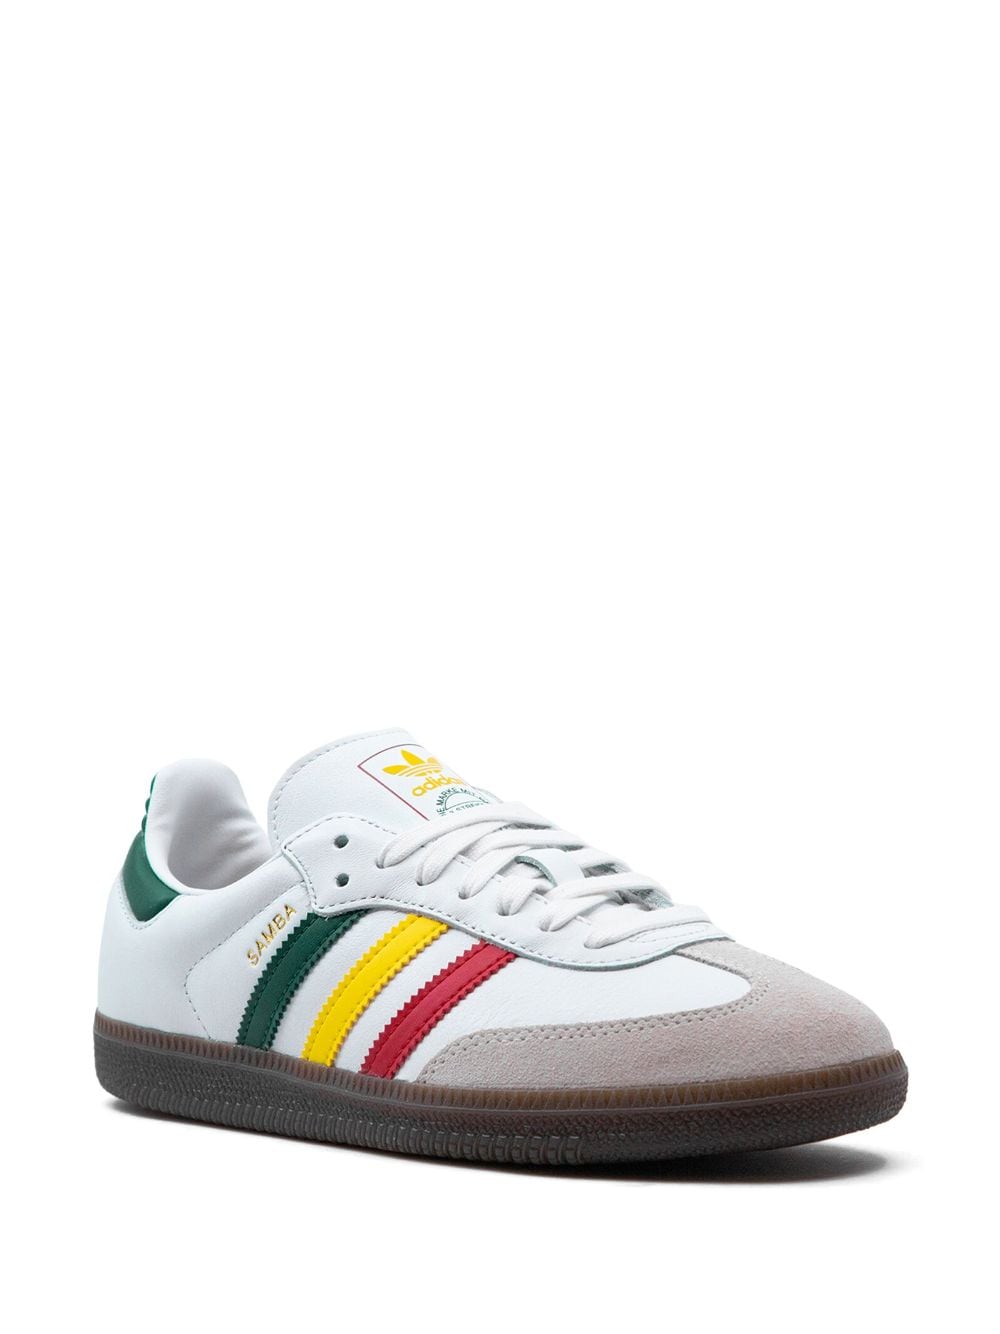 Image 2 of adidas Samba OG "Rasta Pack - White" sneakers